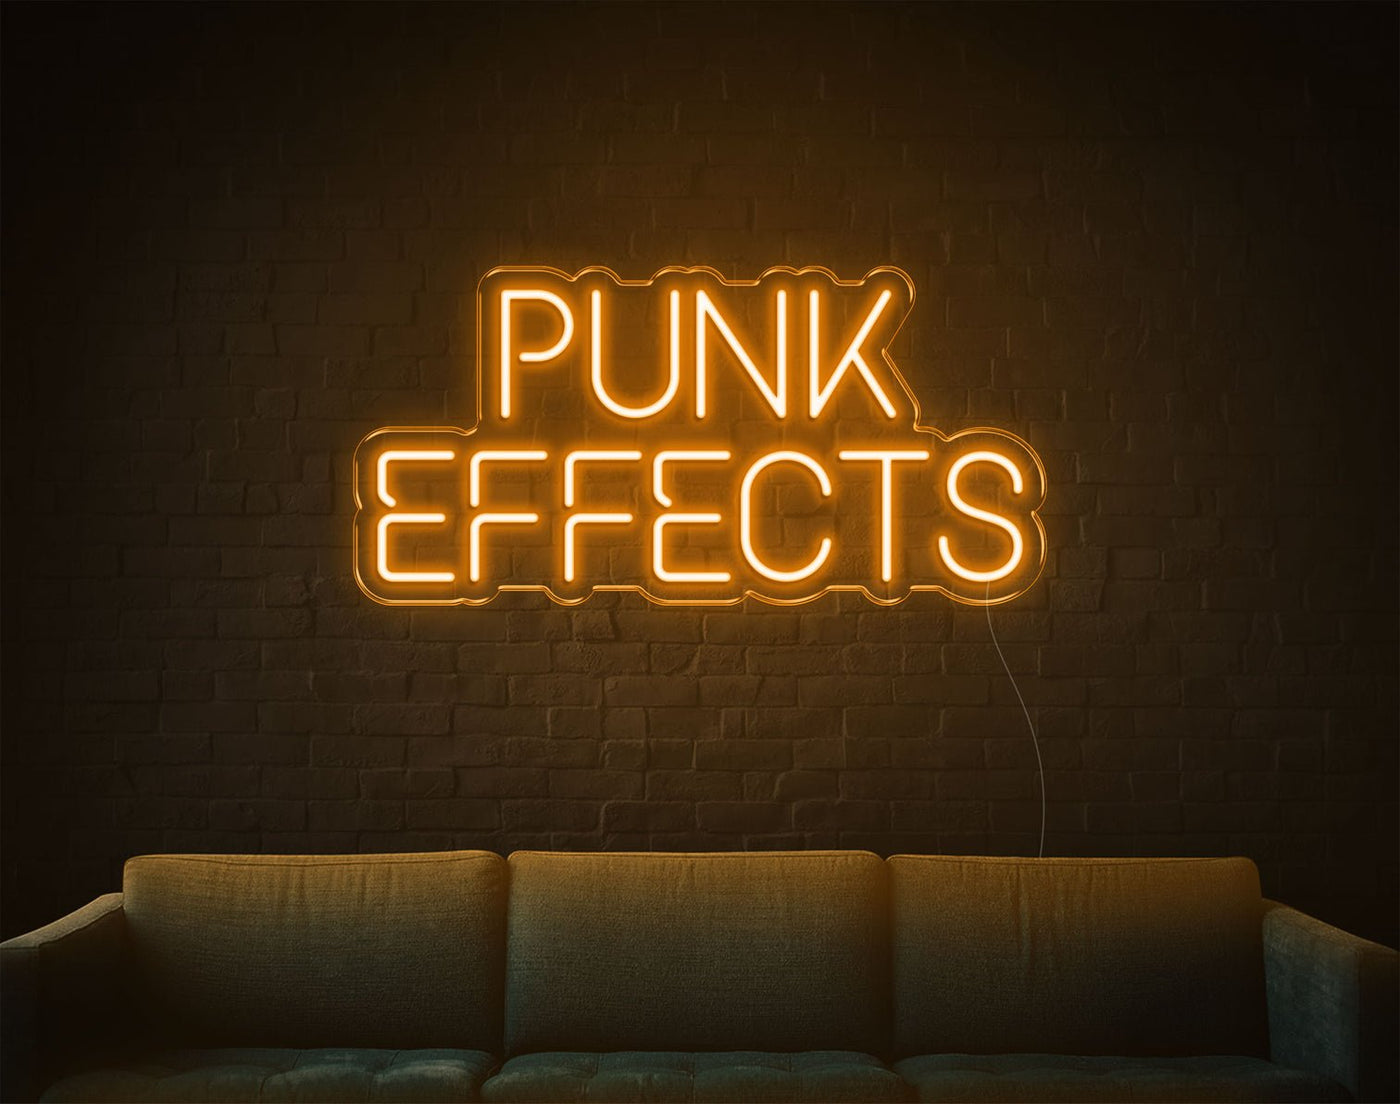 Punk Effects LED Neon Sign - 10inch x 20inchOrange